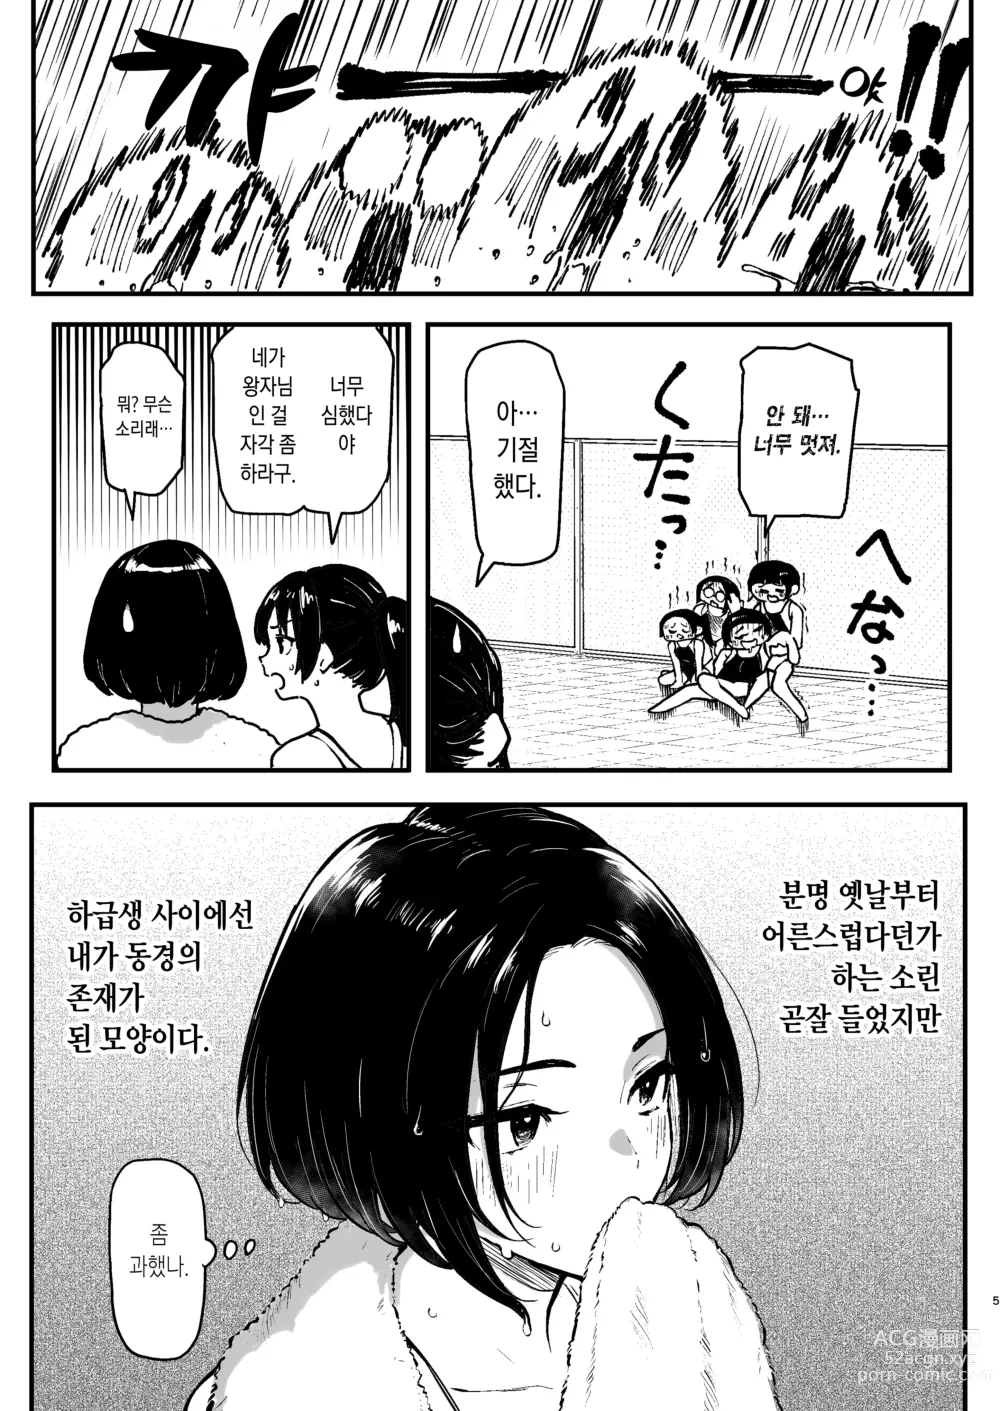 Page 5 of doujinshi 미하루의 처음